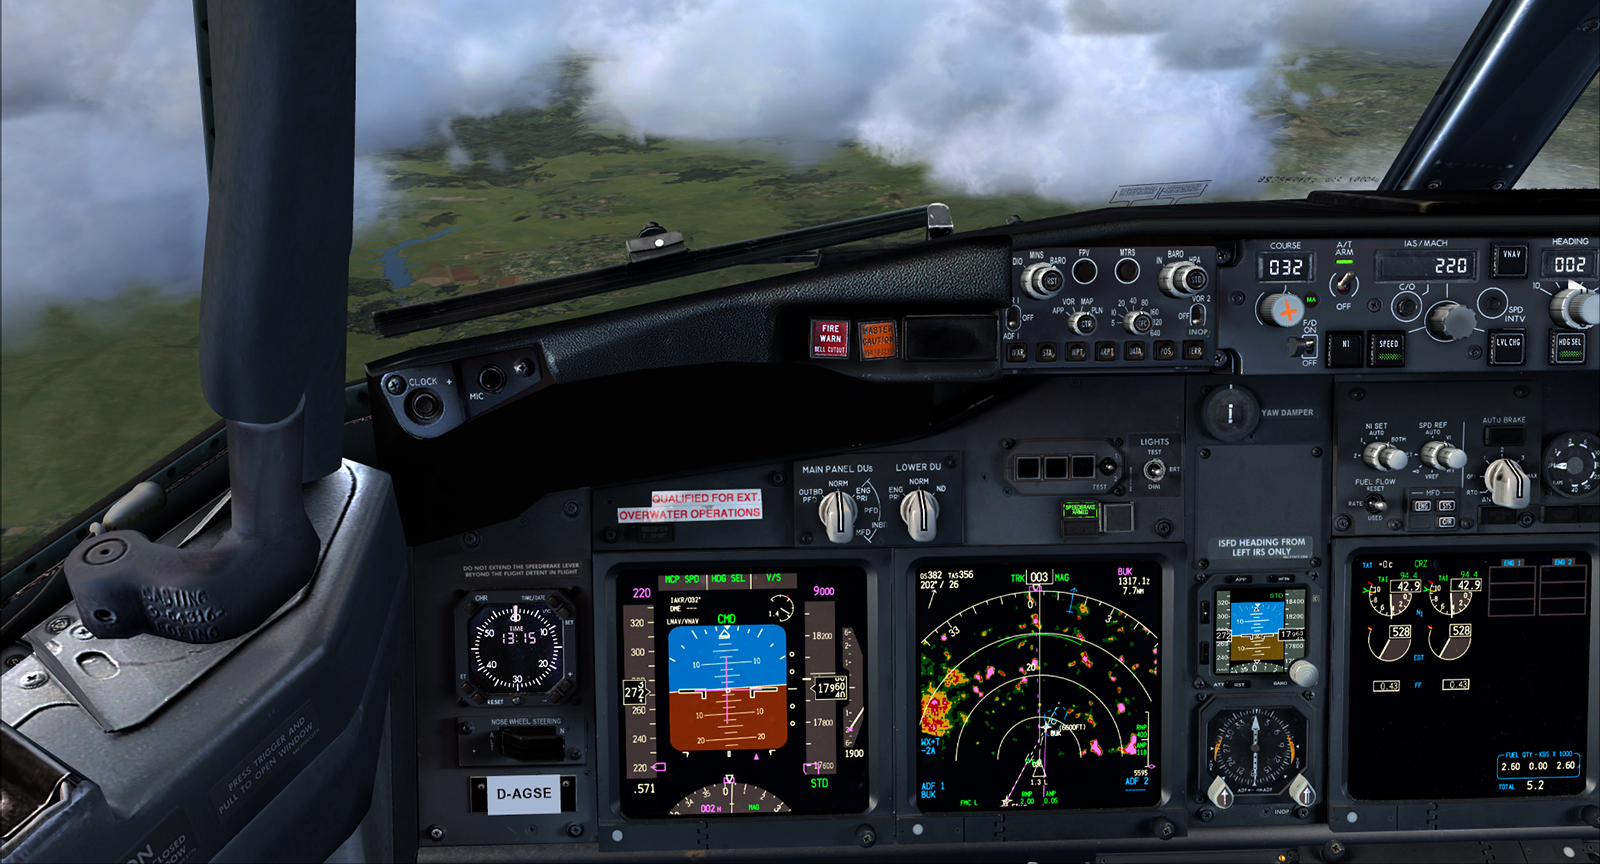 microsoft flight simulator 2017 download